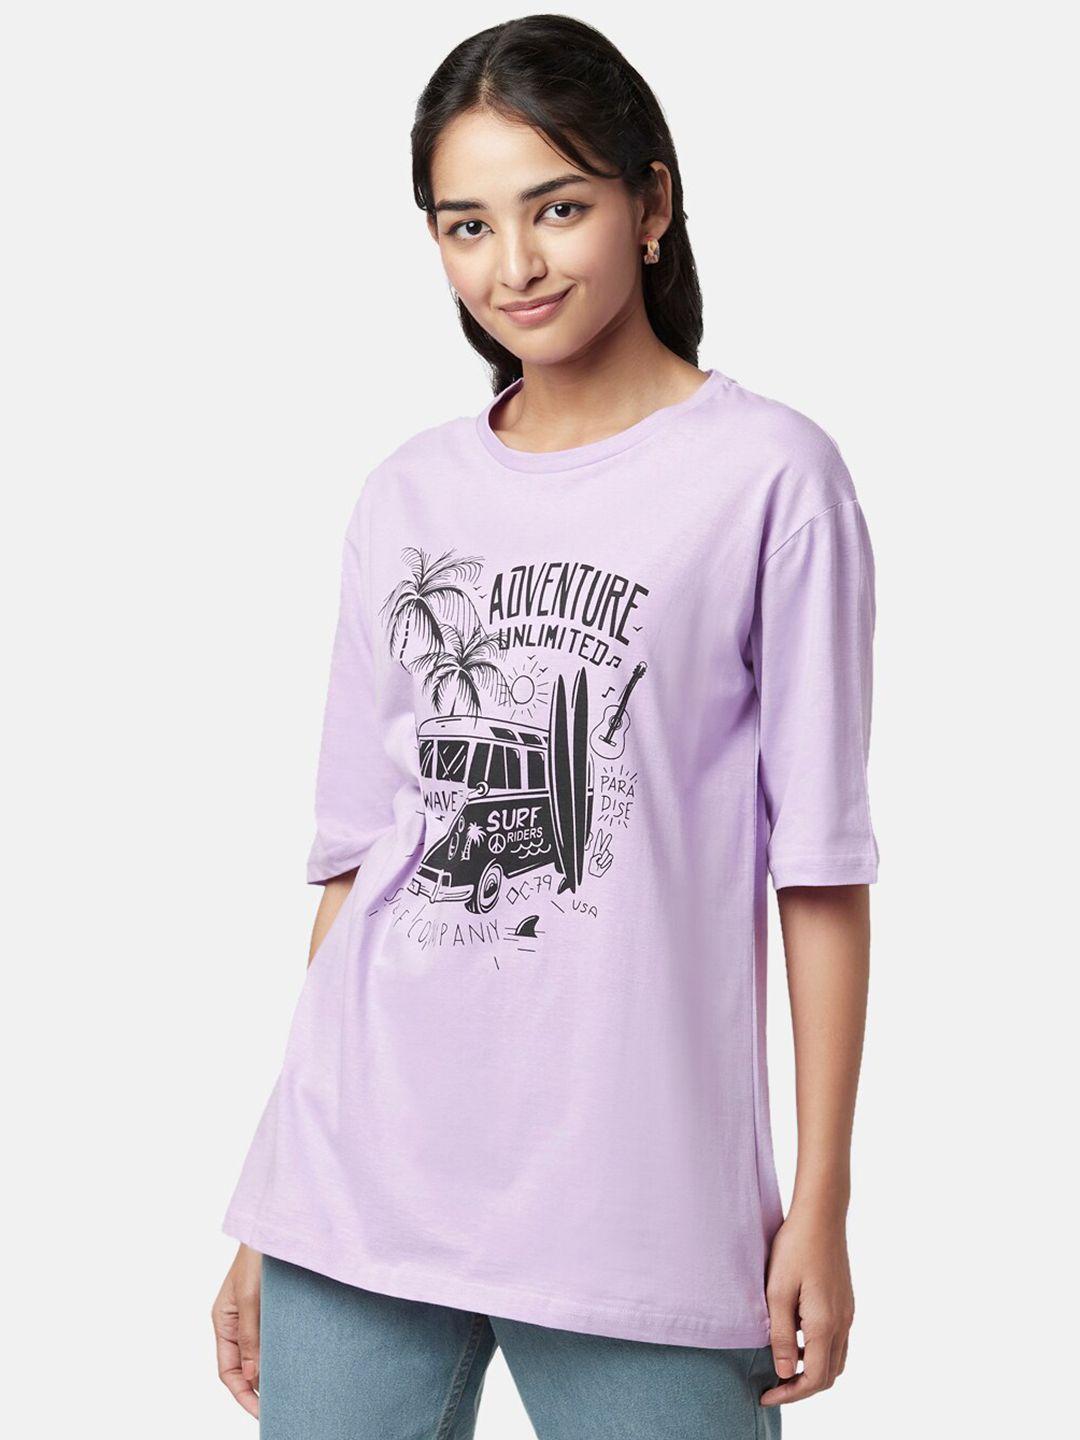 yu-by-pantaloons-women-graphic-printed-cotton-t-shirt